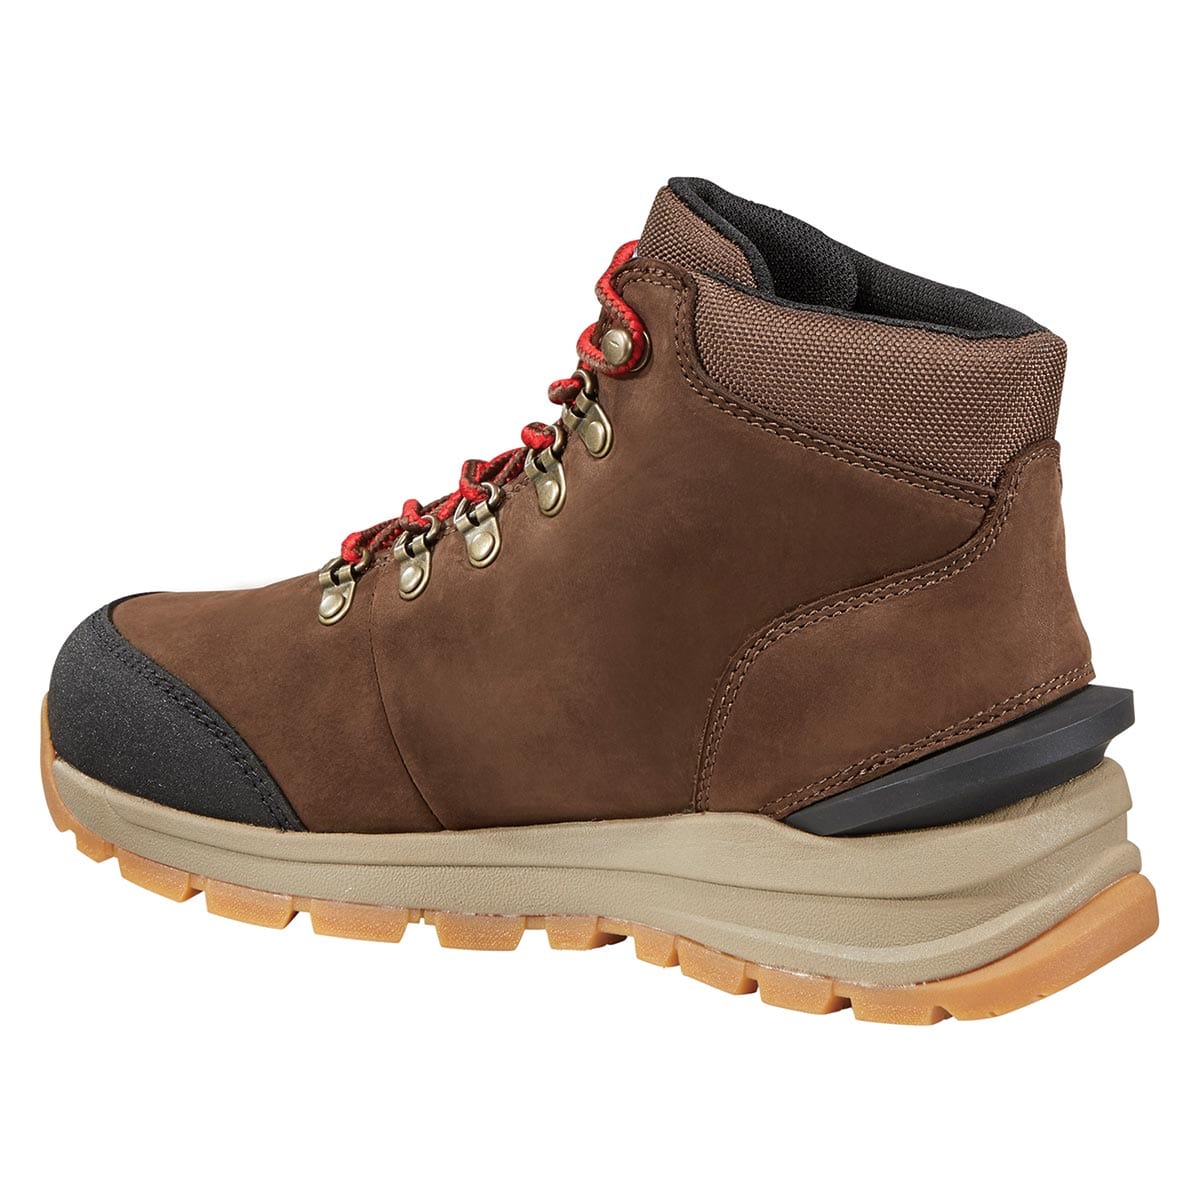 Carhartt Women's Gilmore 5" Alloy Safety Toe Work Hiker Boots - Dark Brown